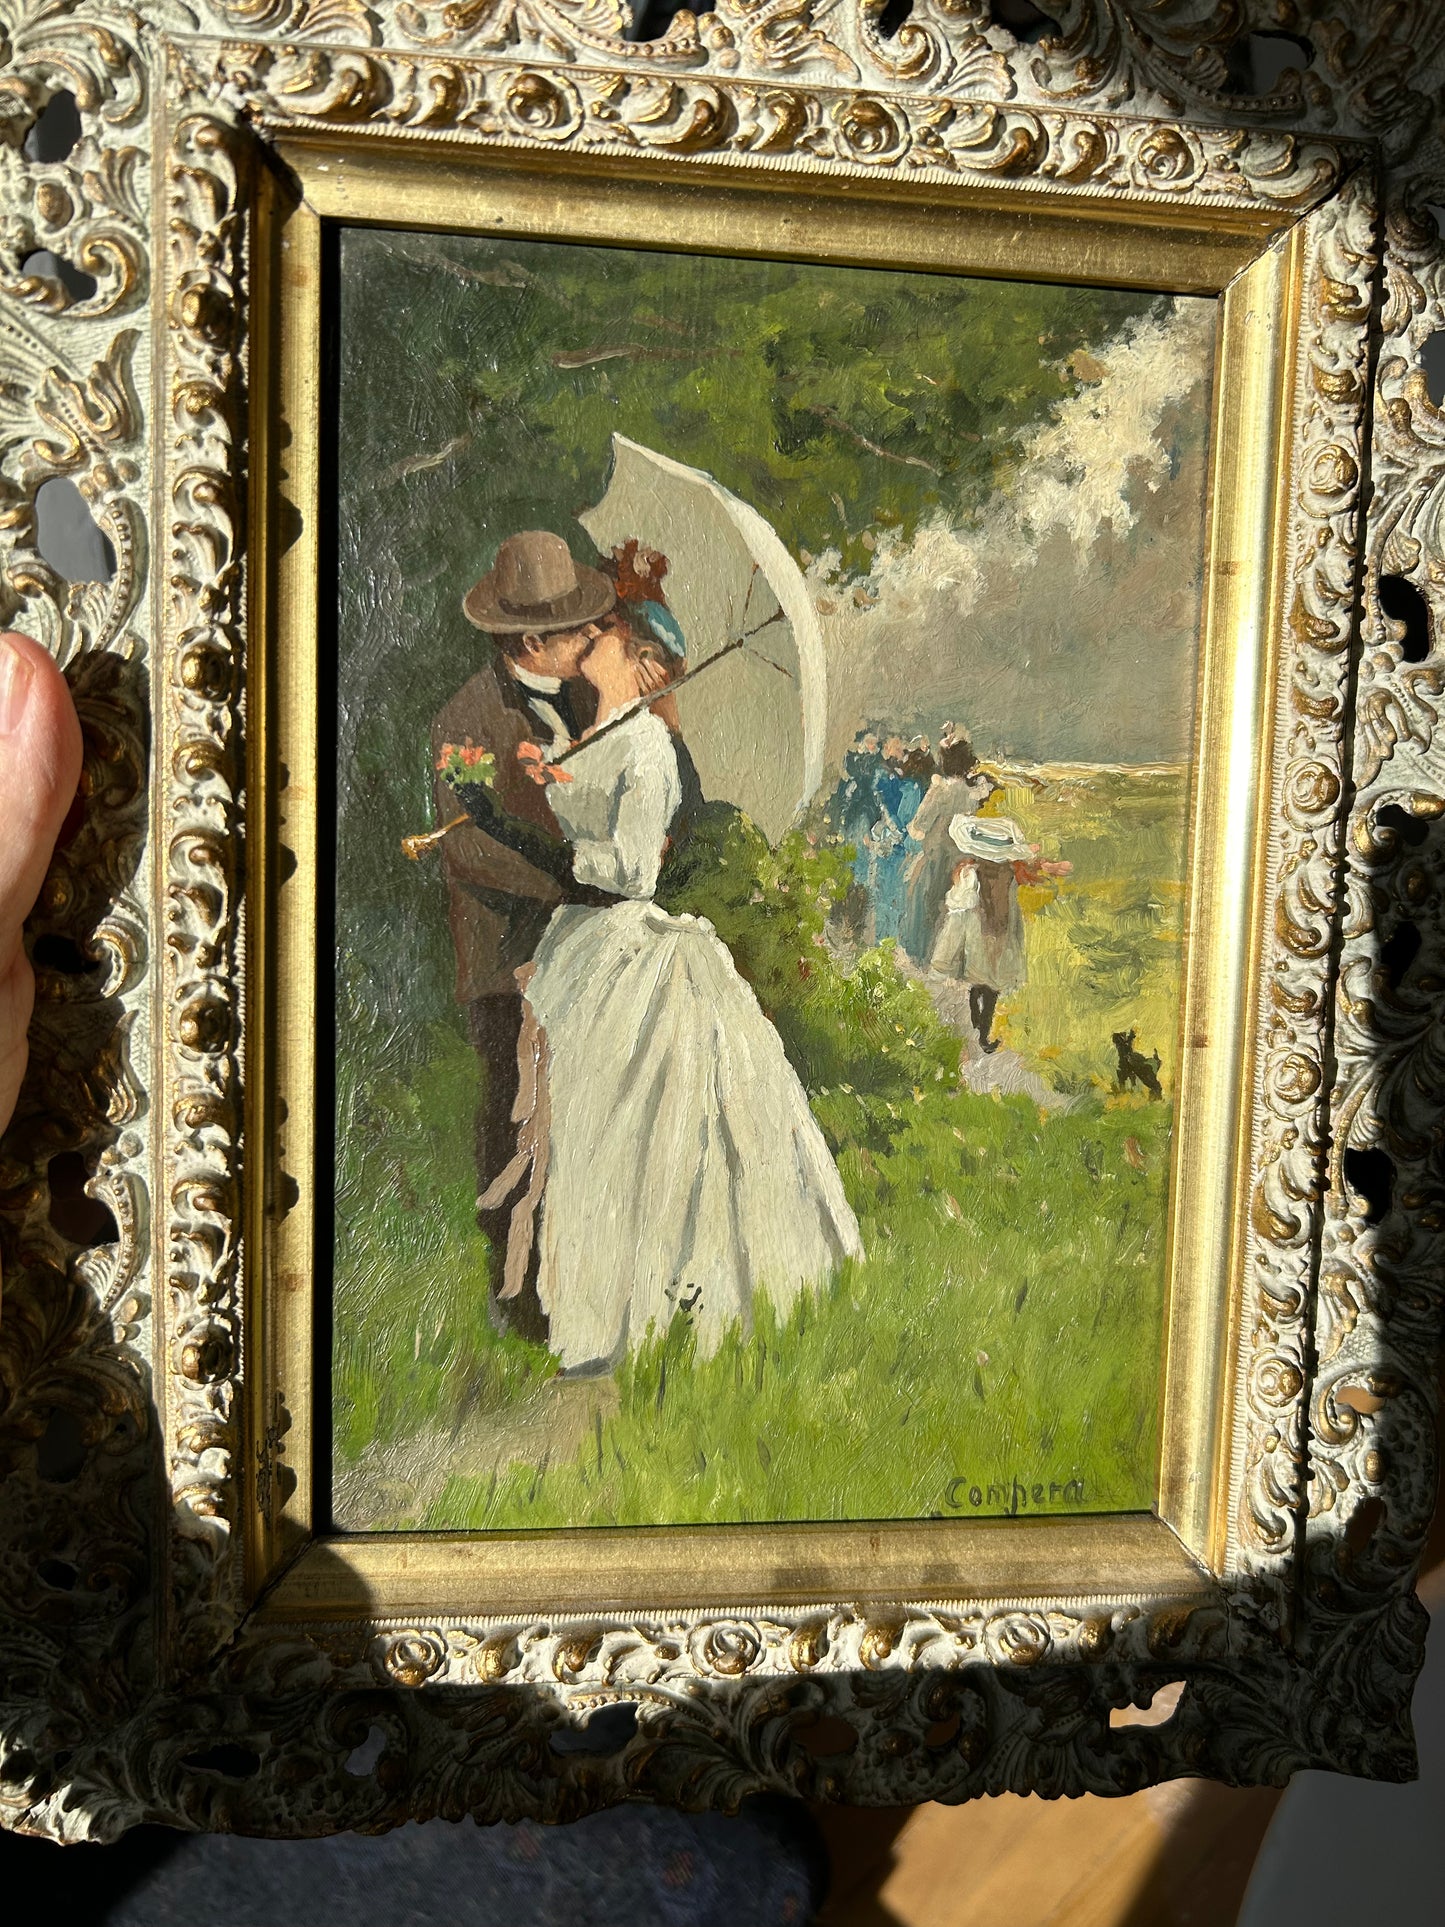 Romantic Original Antique Oil Painting on Board German artist Reinicke c. 1890